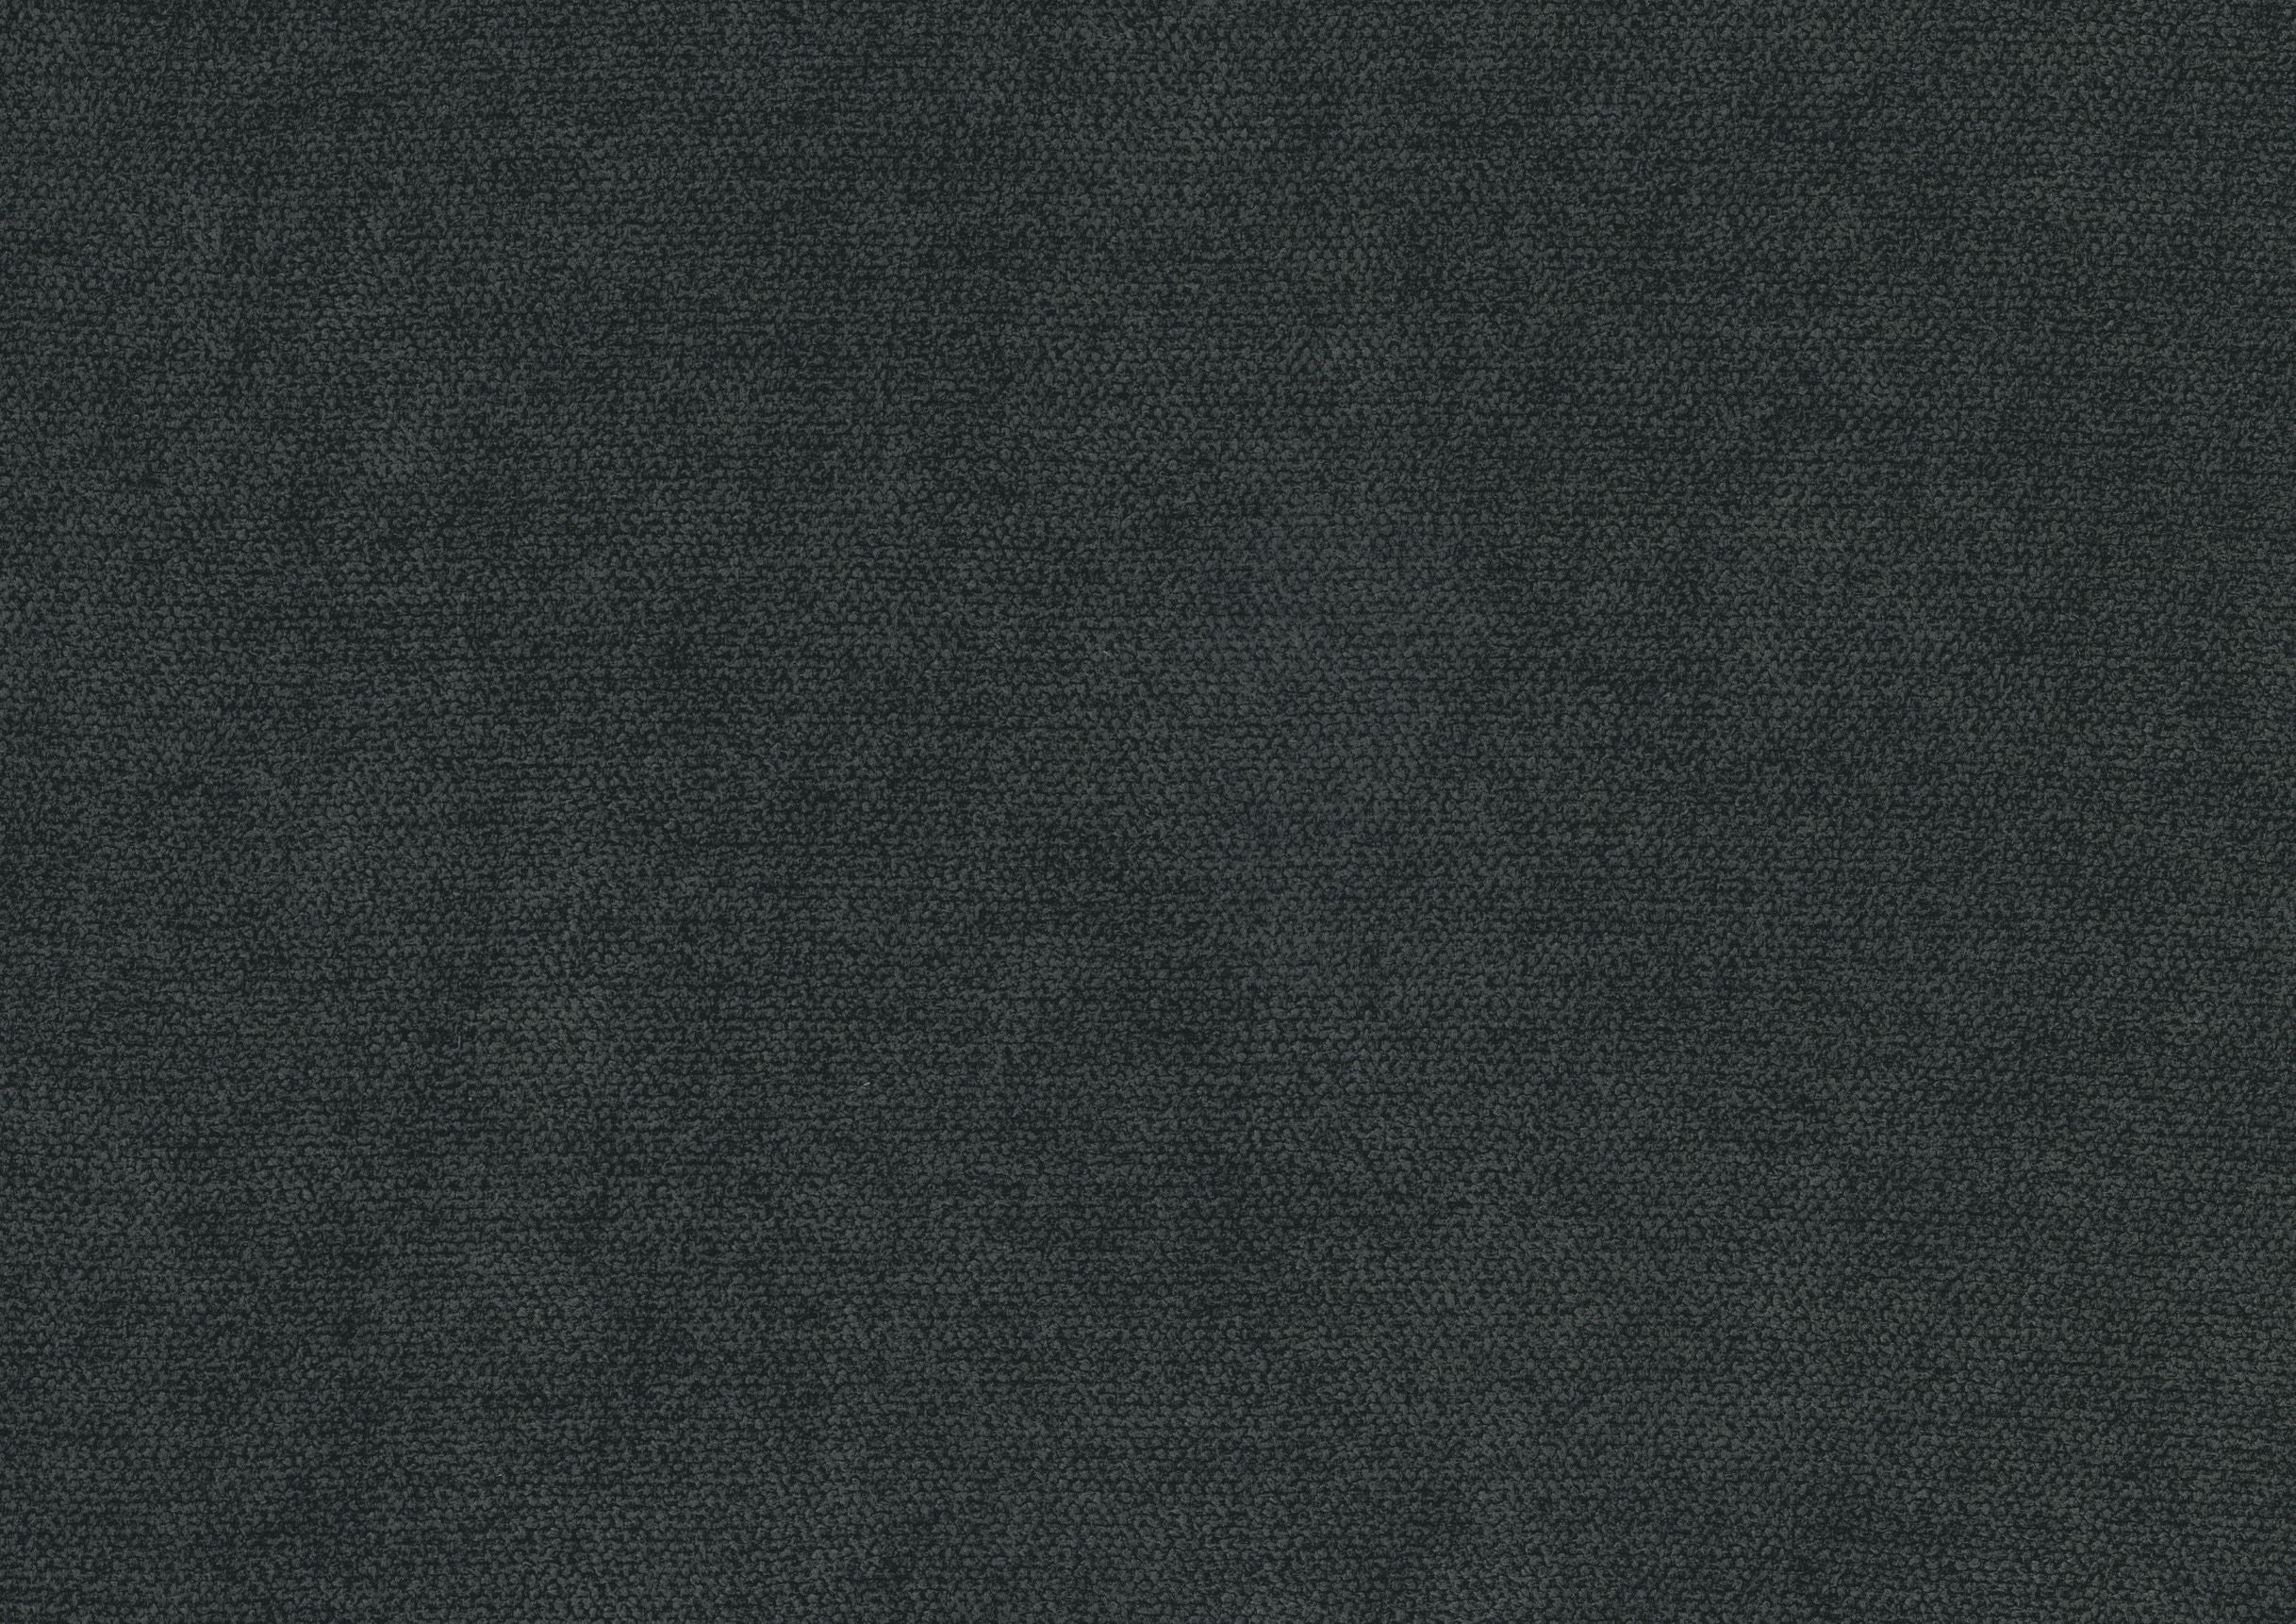 Holleman Sofa Collection Dark Grey 9333